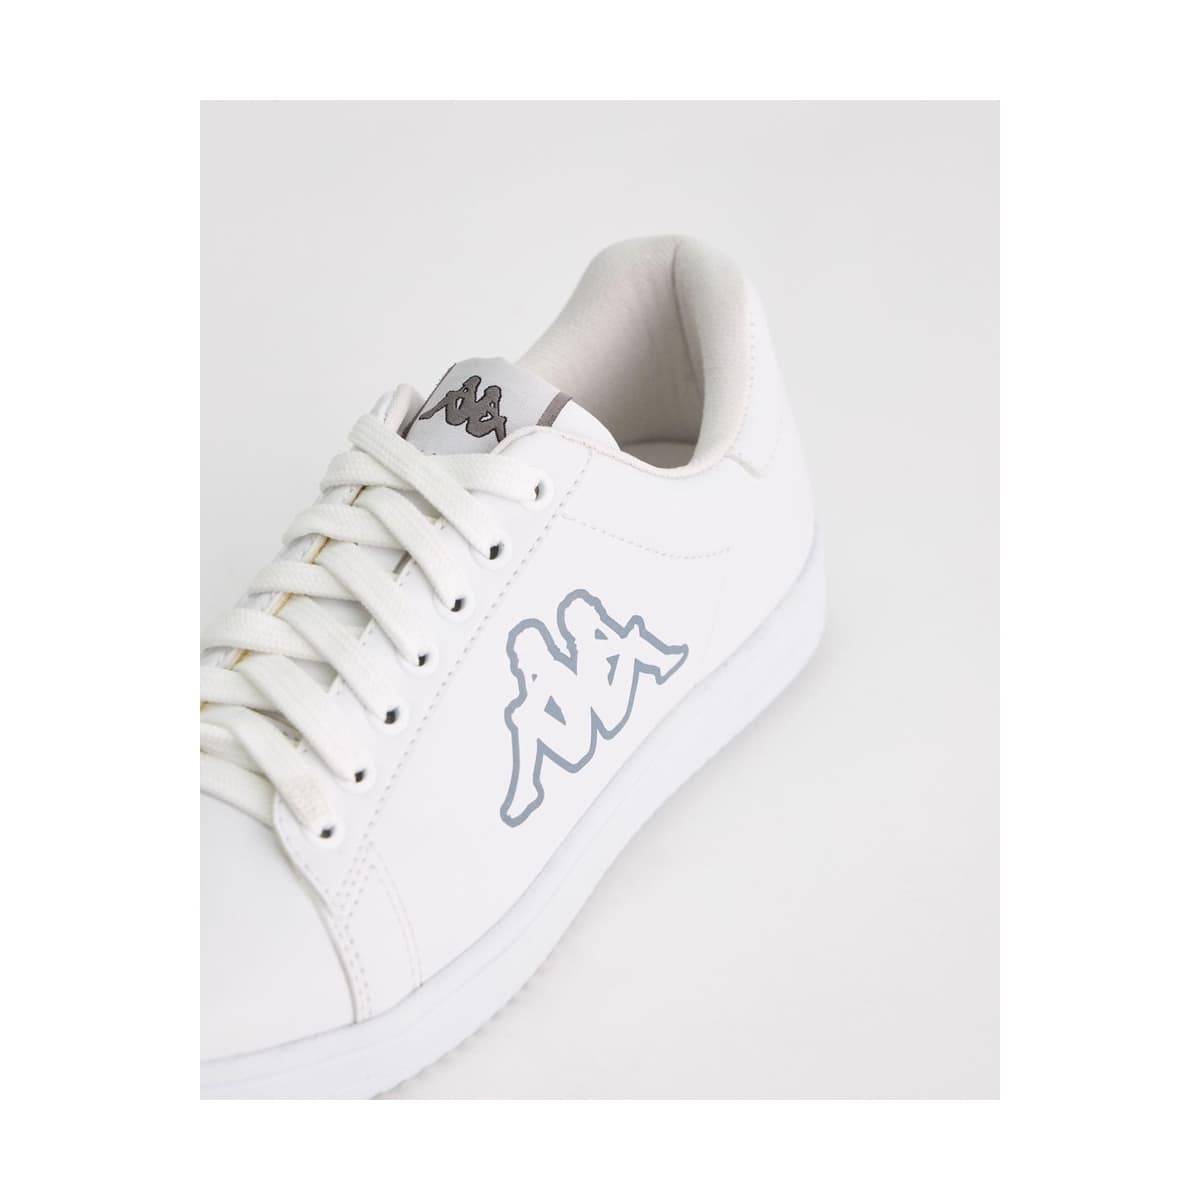 Kappa Logo Galter 5 Beyaz Spor Ayakkabı (381I8HW-001)